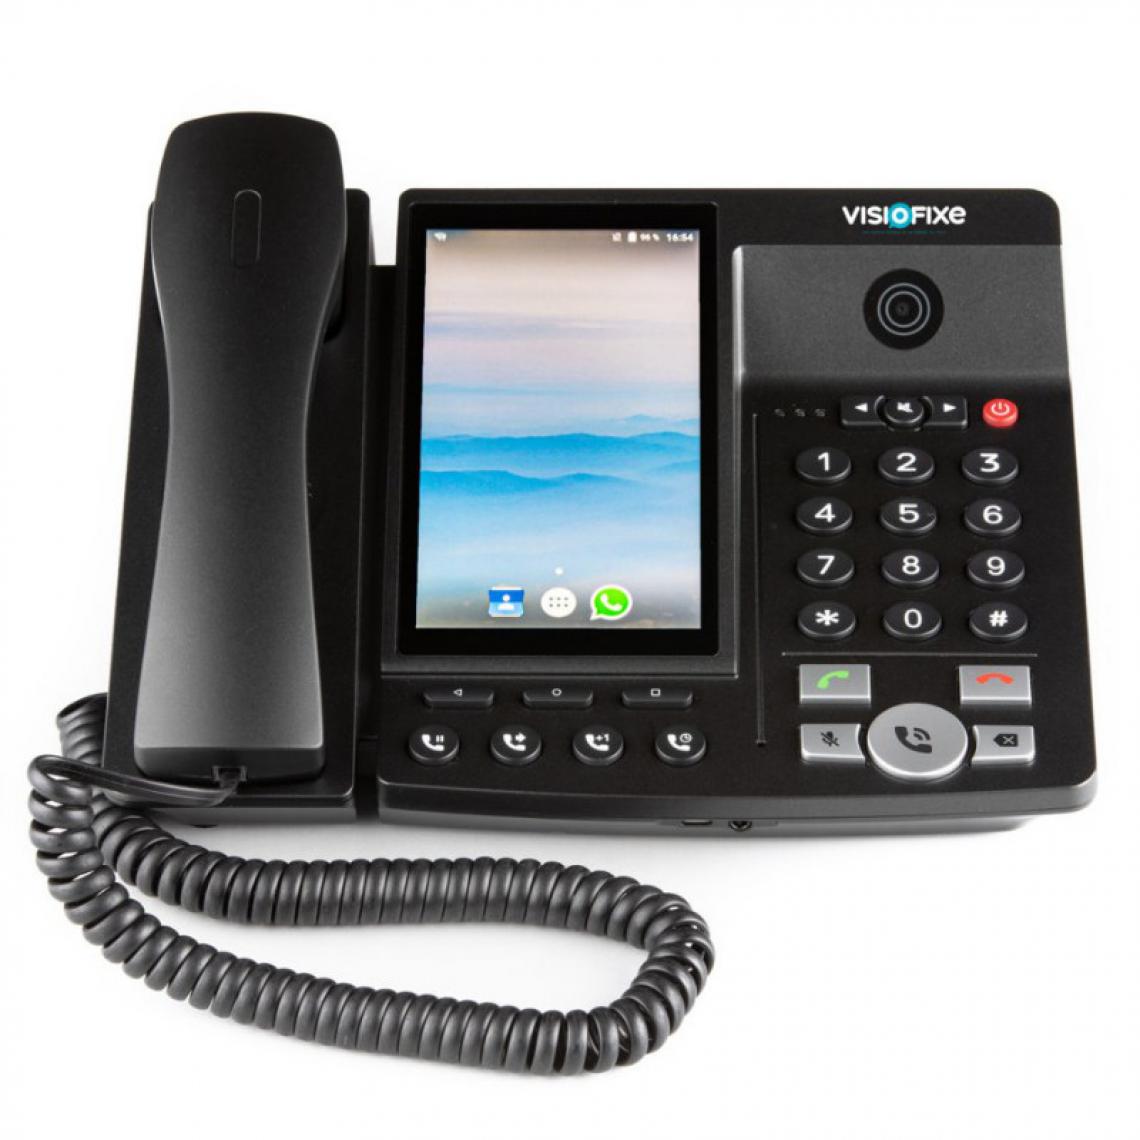 Audilo - Telephone fixe senior Visiofixe A20 avec whatsapp - Téléphone fixe filaire